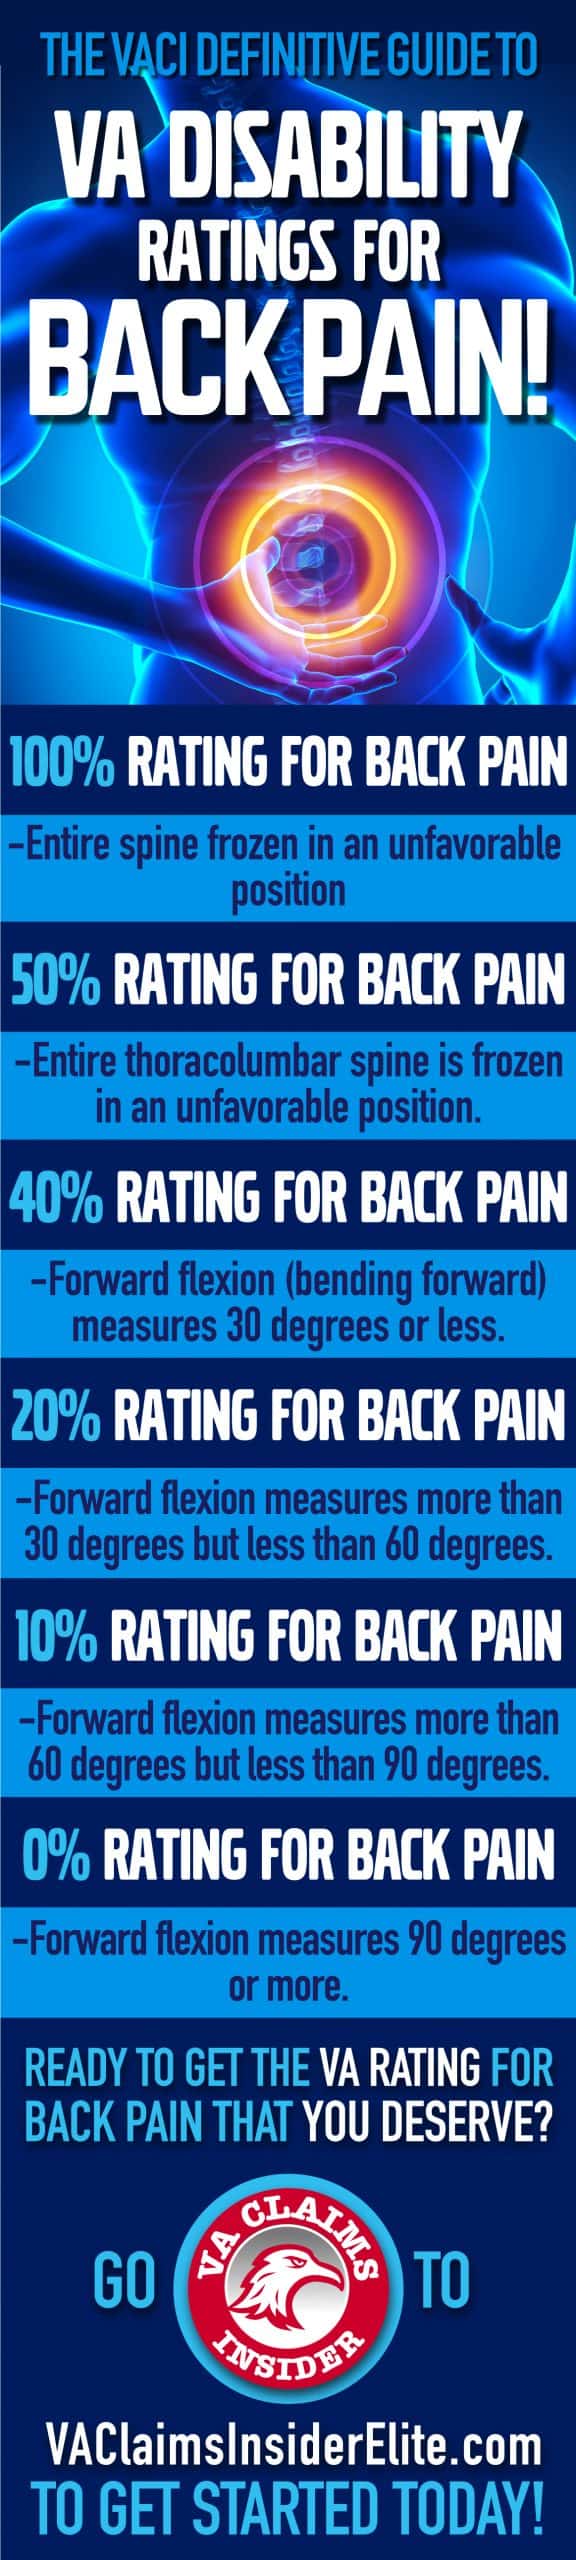 VA Rating for Back Pain